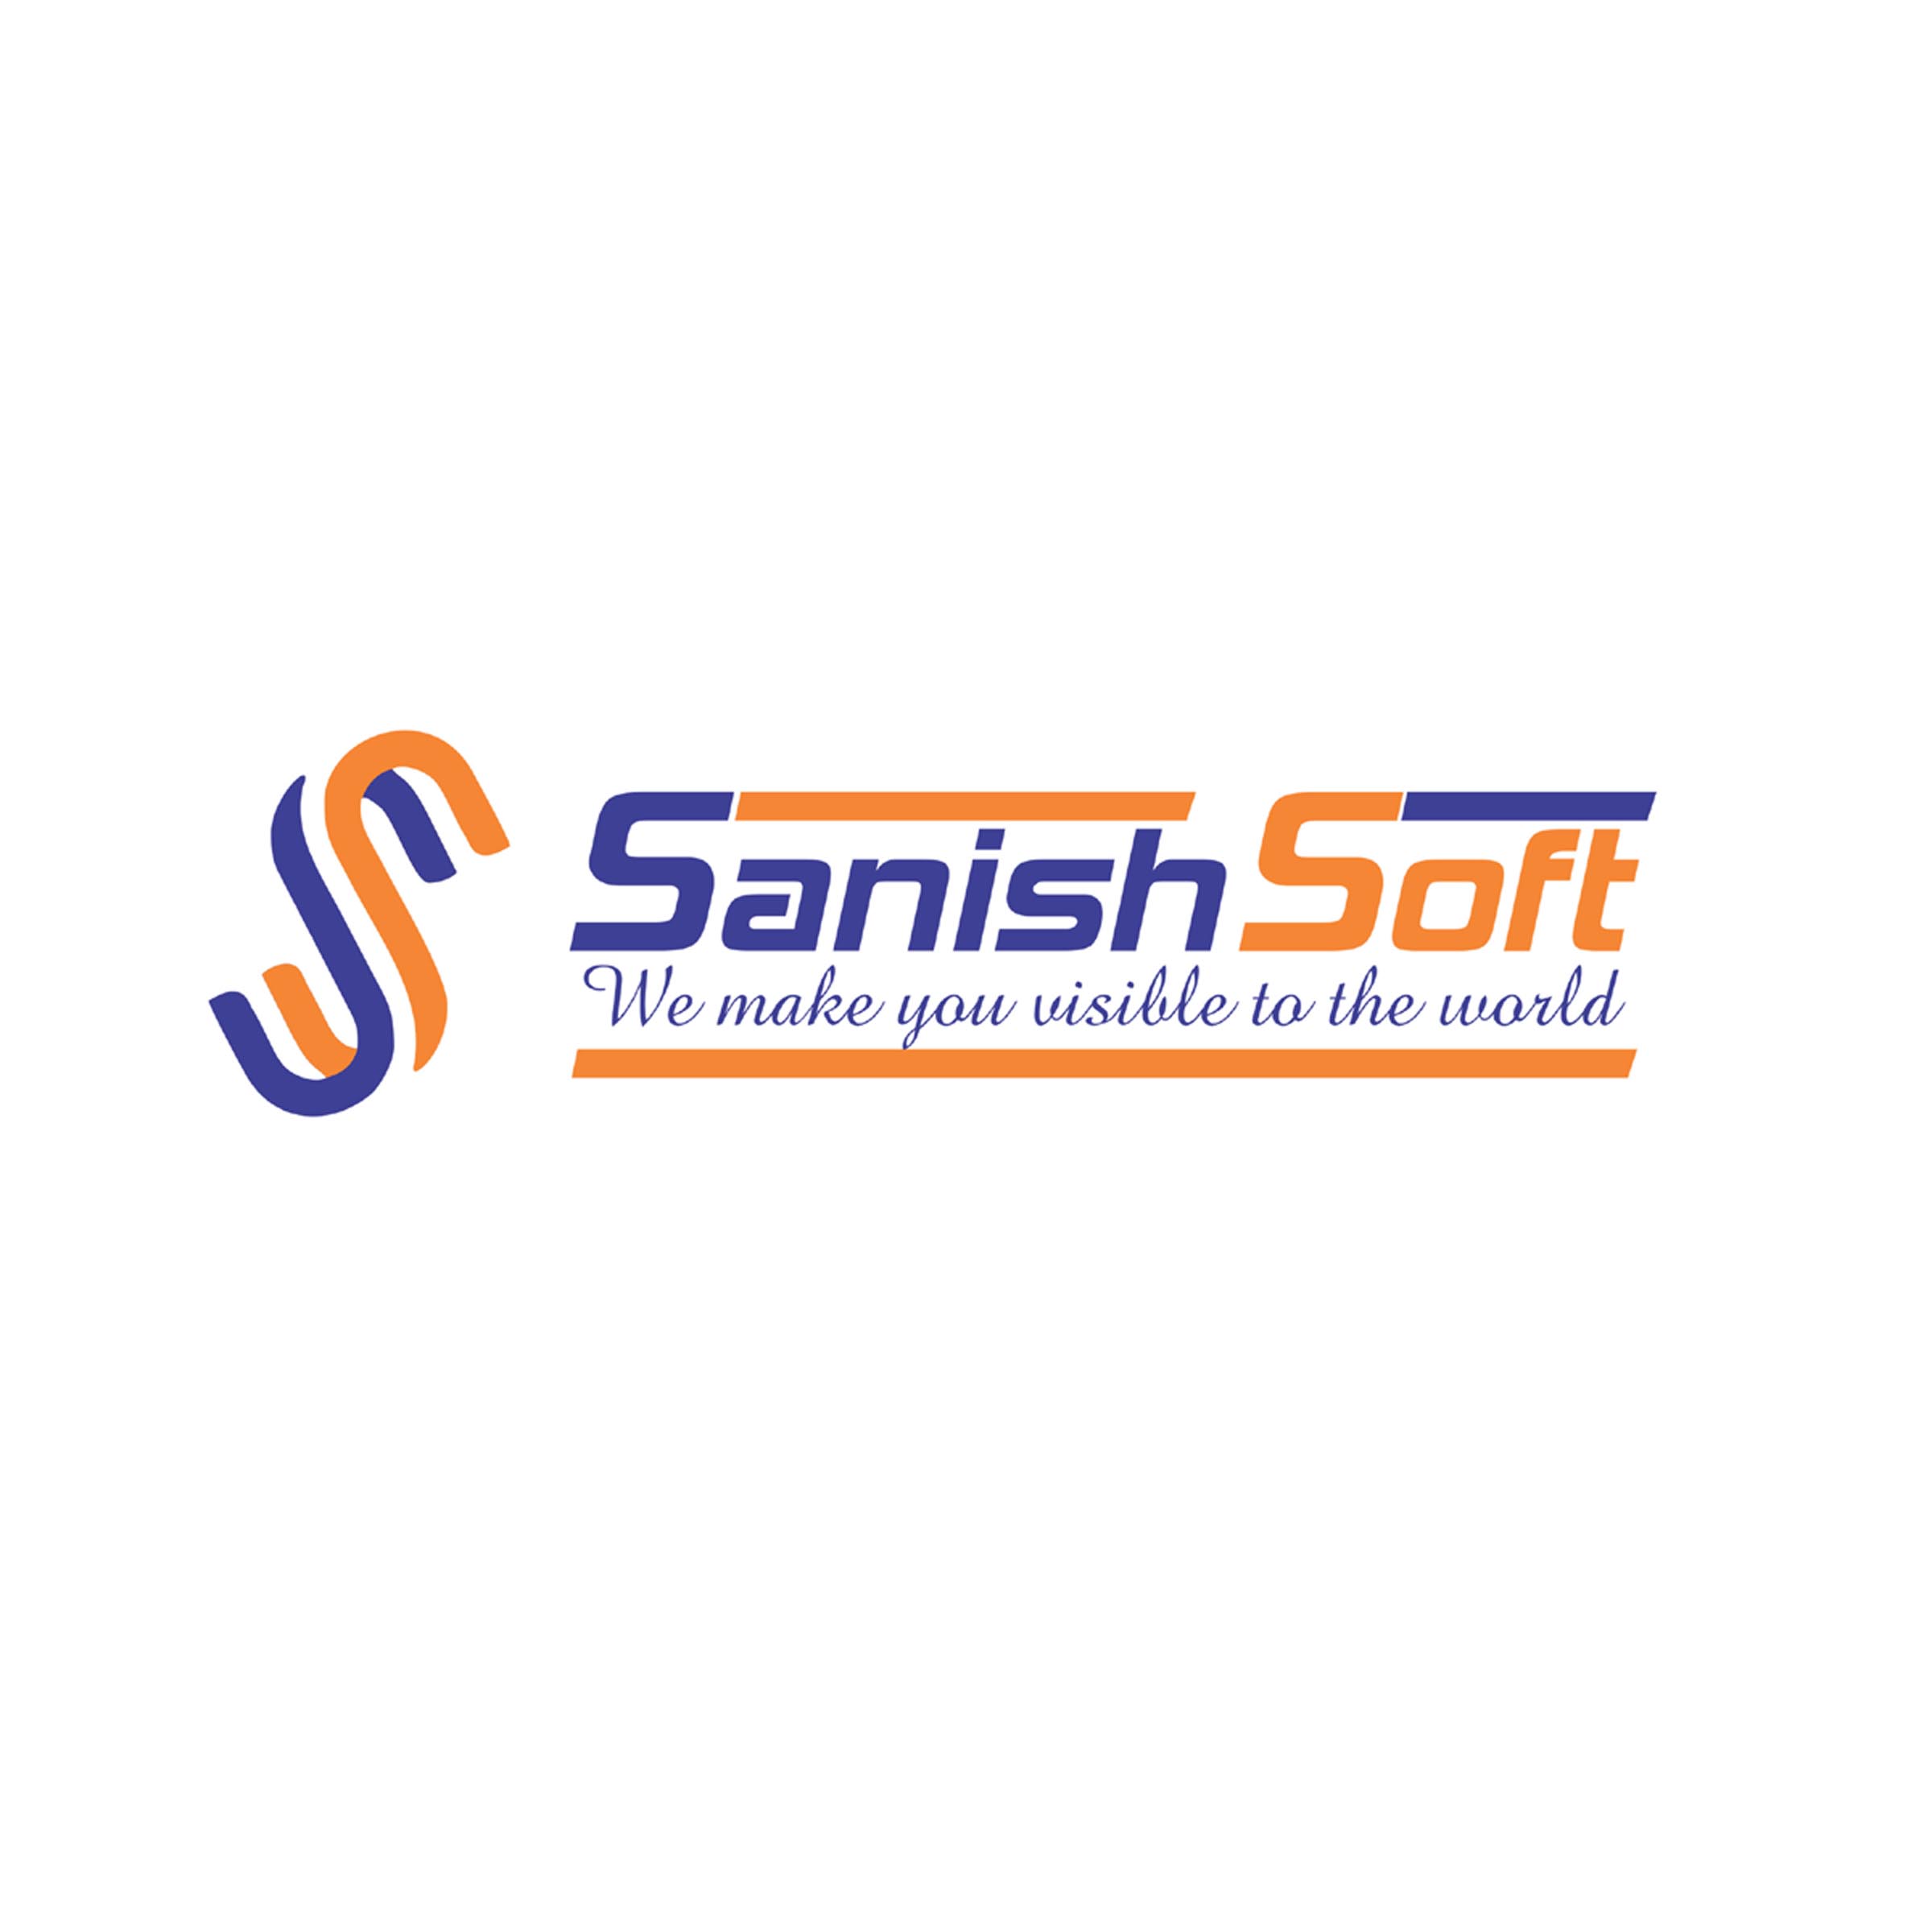 Sanishsoft Website Design Company|Legal Services|Professional Services